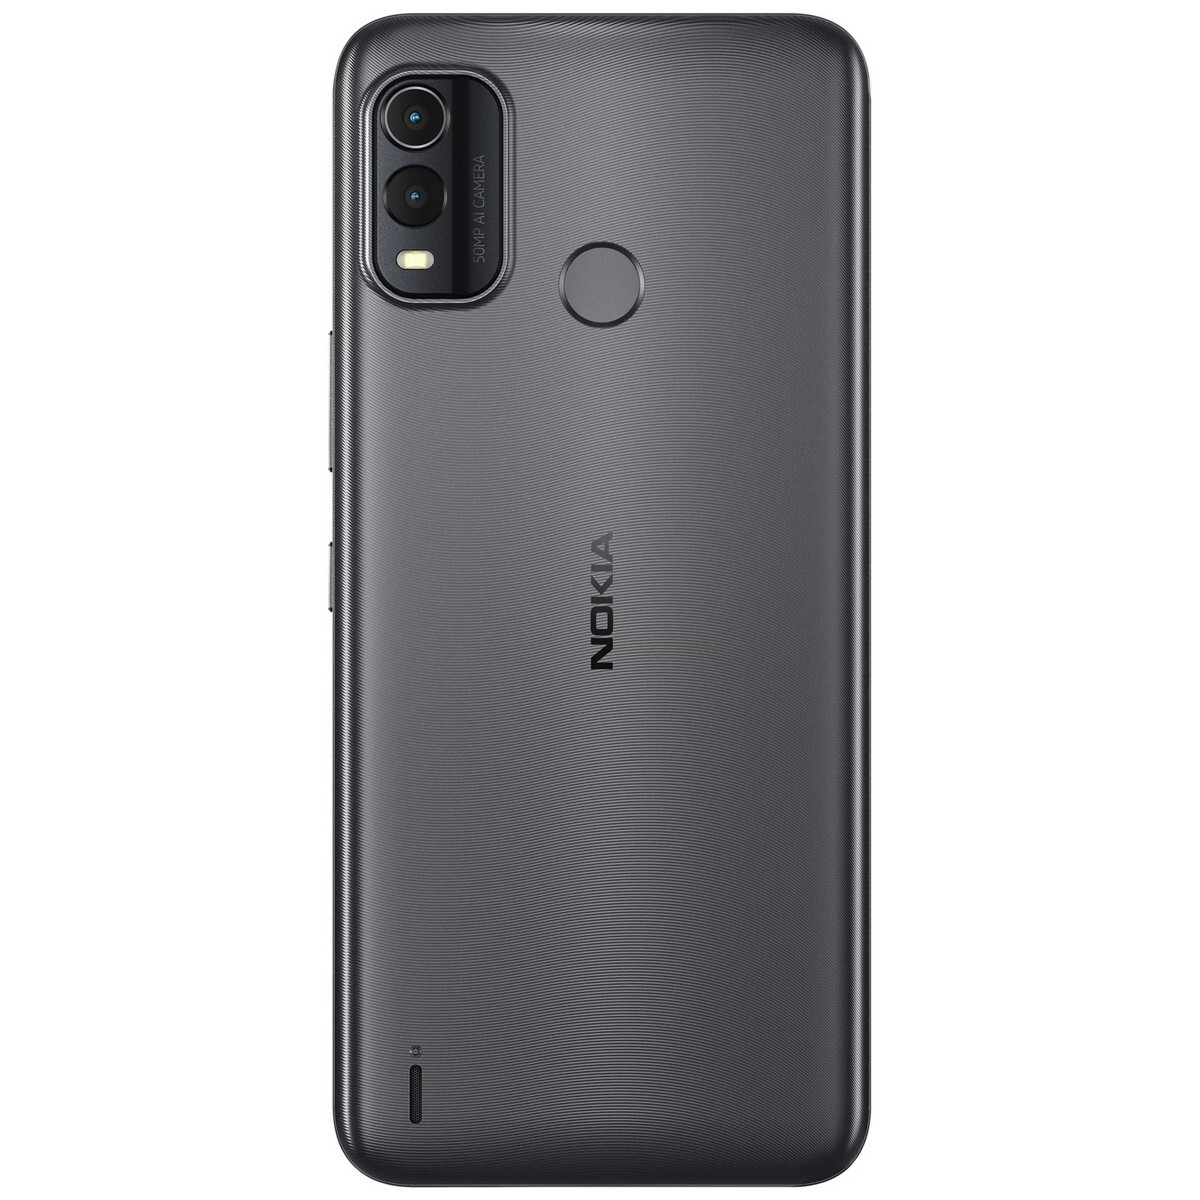 Nokia G11 Plus 4GB/64GB Charcoal Grey